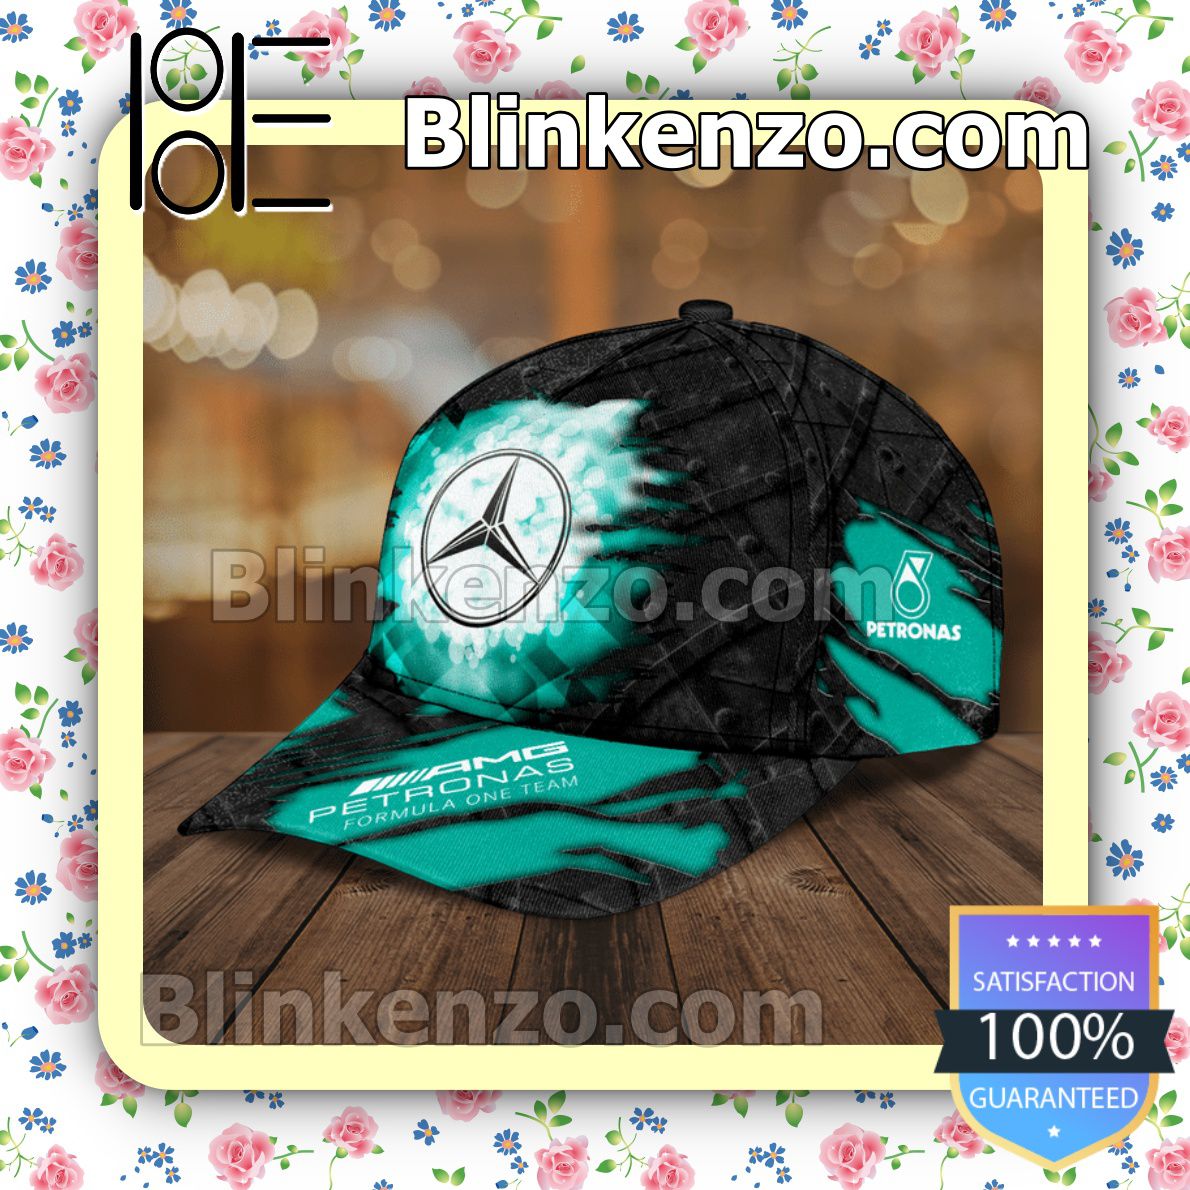 Print On Demand Mercedes Amg Petronas Formula One Team Baseball Caps Gift For Boyfriend